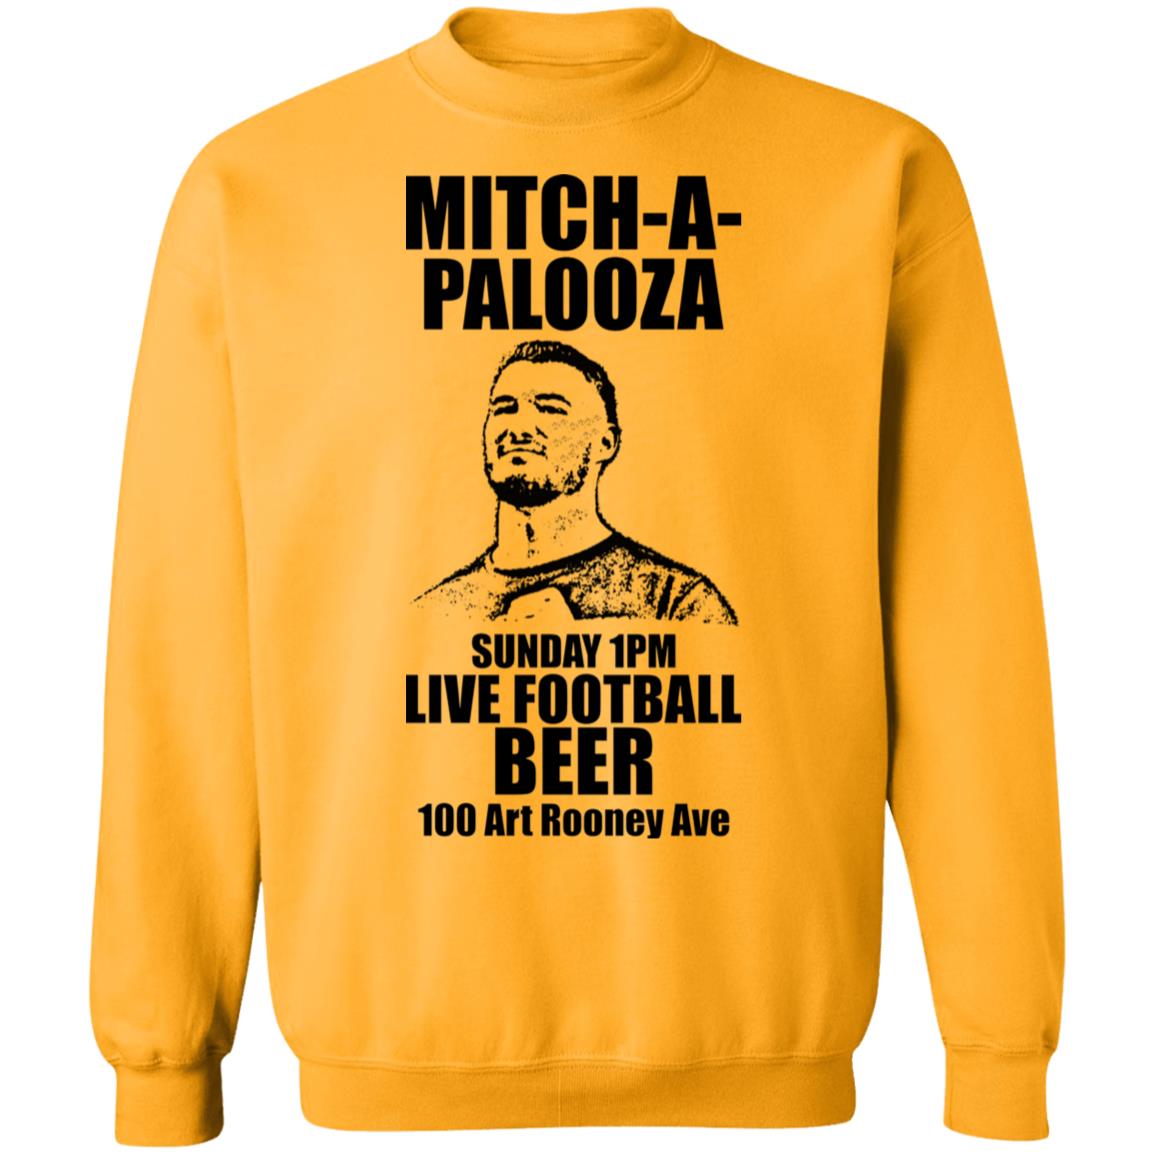 Mitch A Palooza Sunday 1Pm Live Football Beer Gold Shirt 1